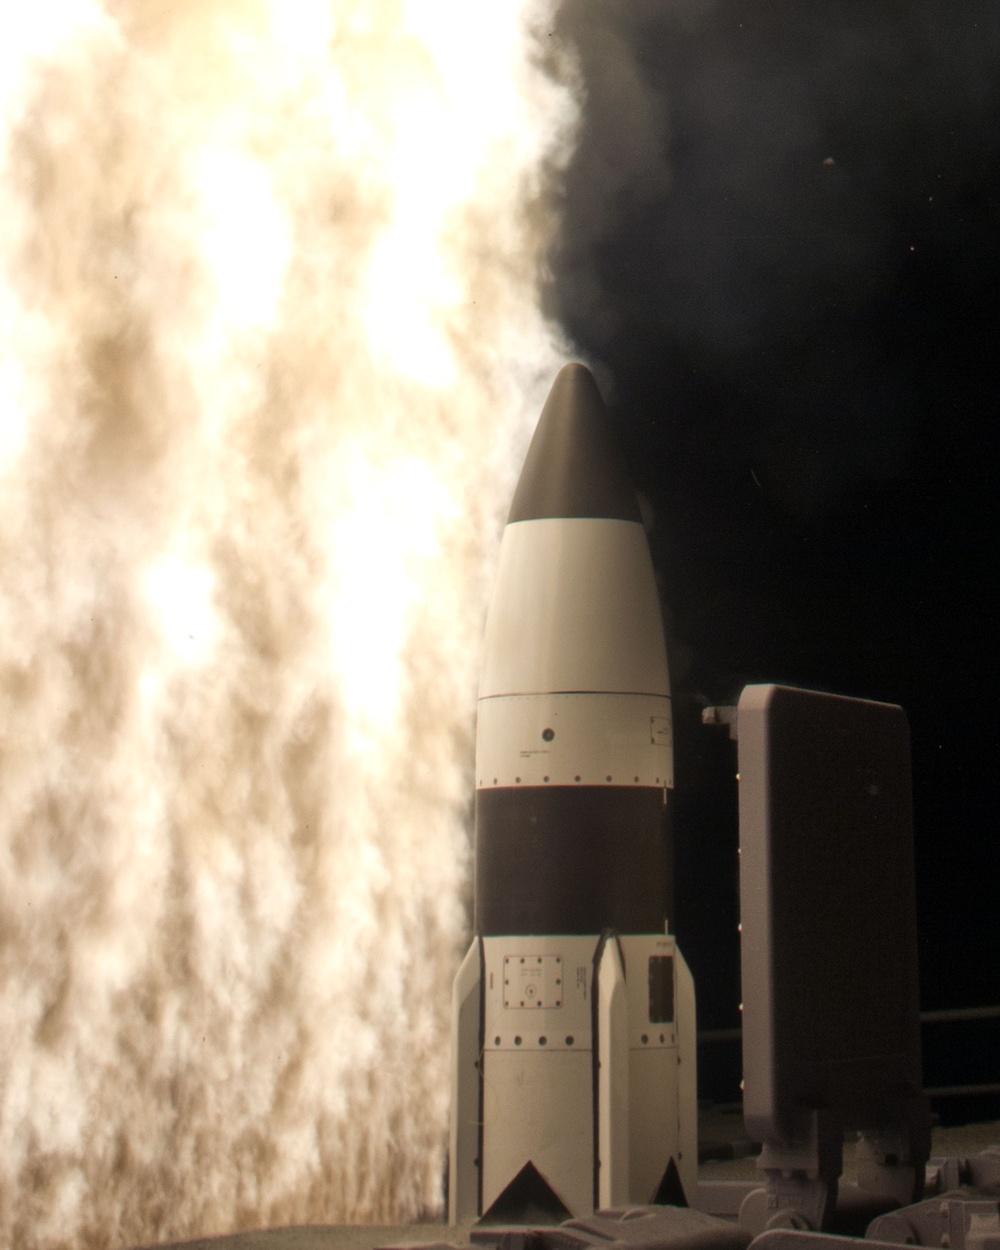 SM-3 Block 1A launch